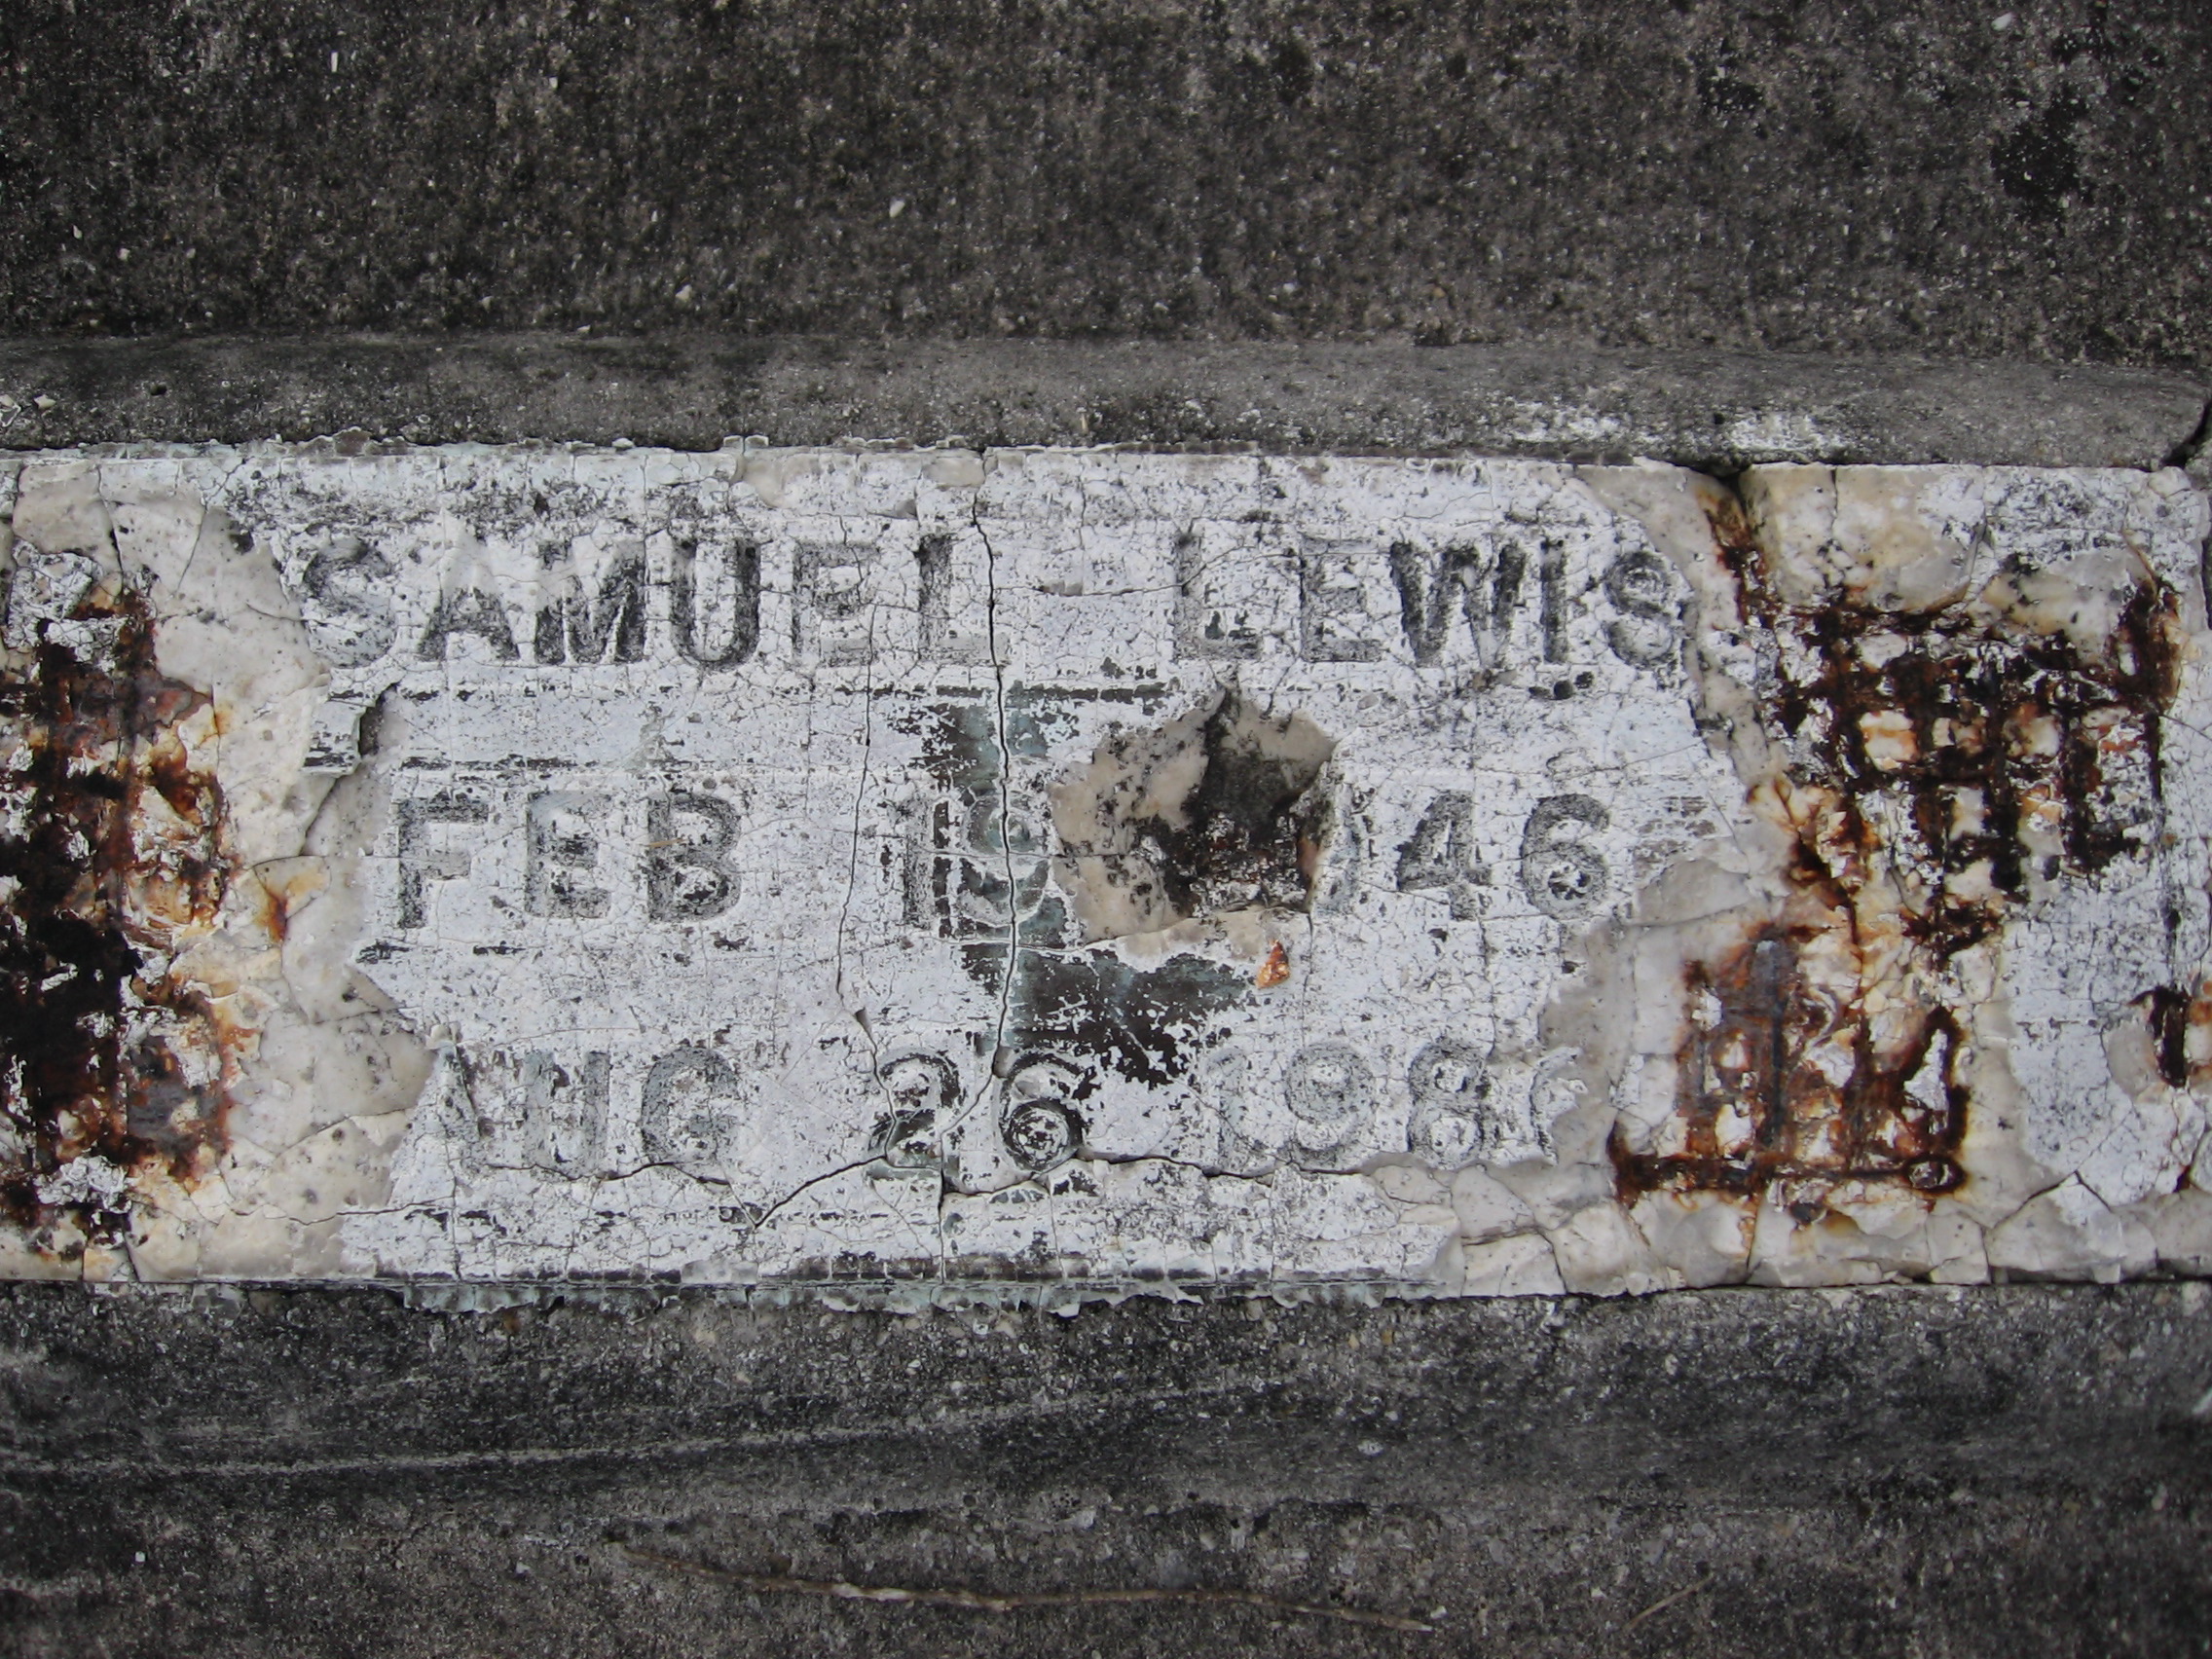 Samuel Lewis